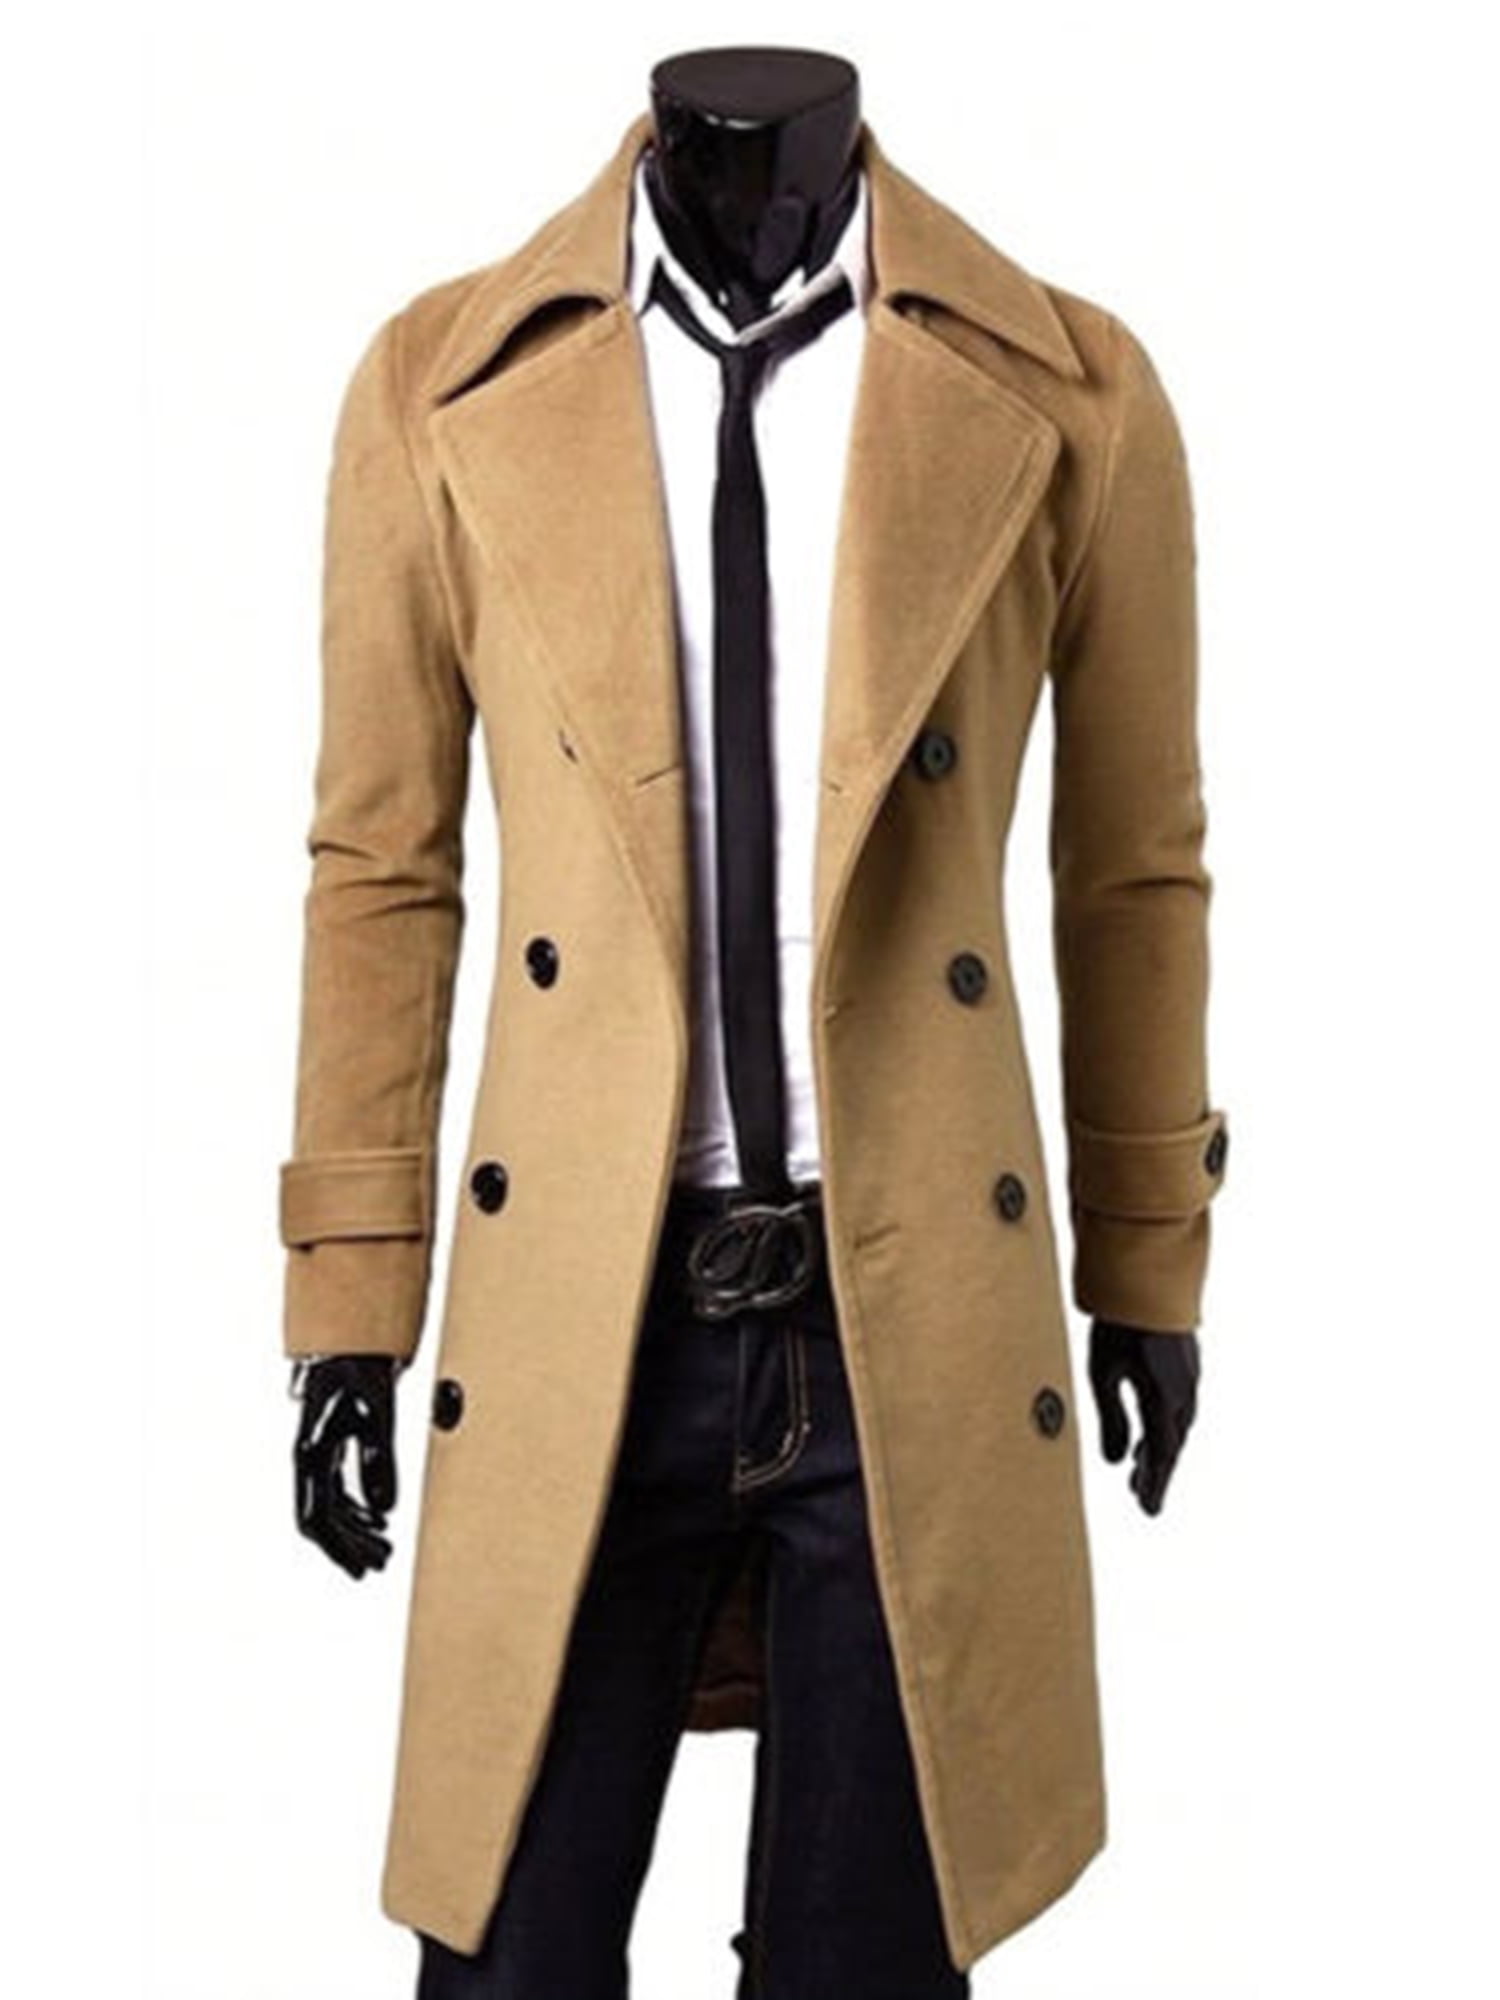 Men's British Jacket Outwear Casual Wool Trench Winter Overcoat Warm Long Coat 